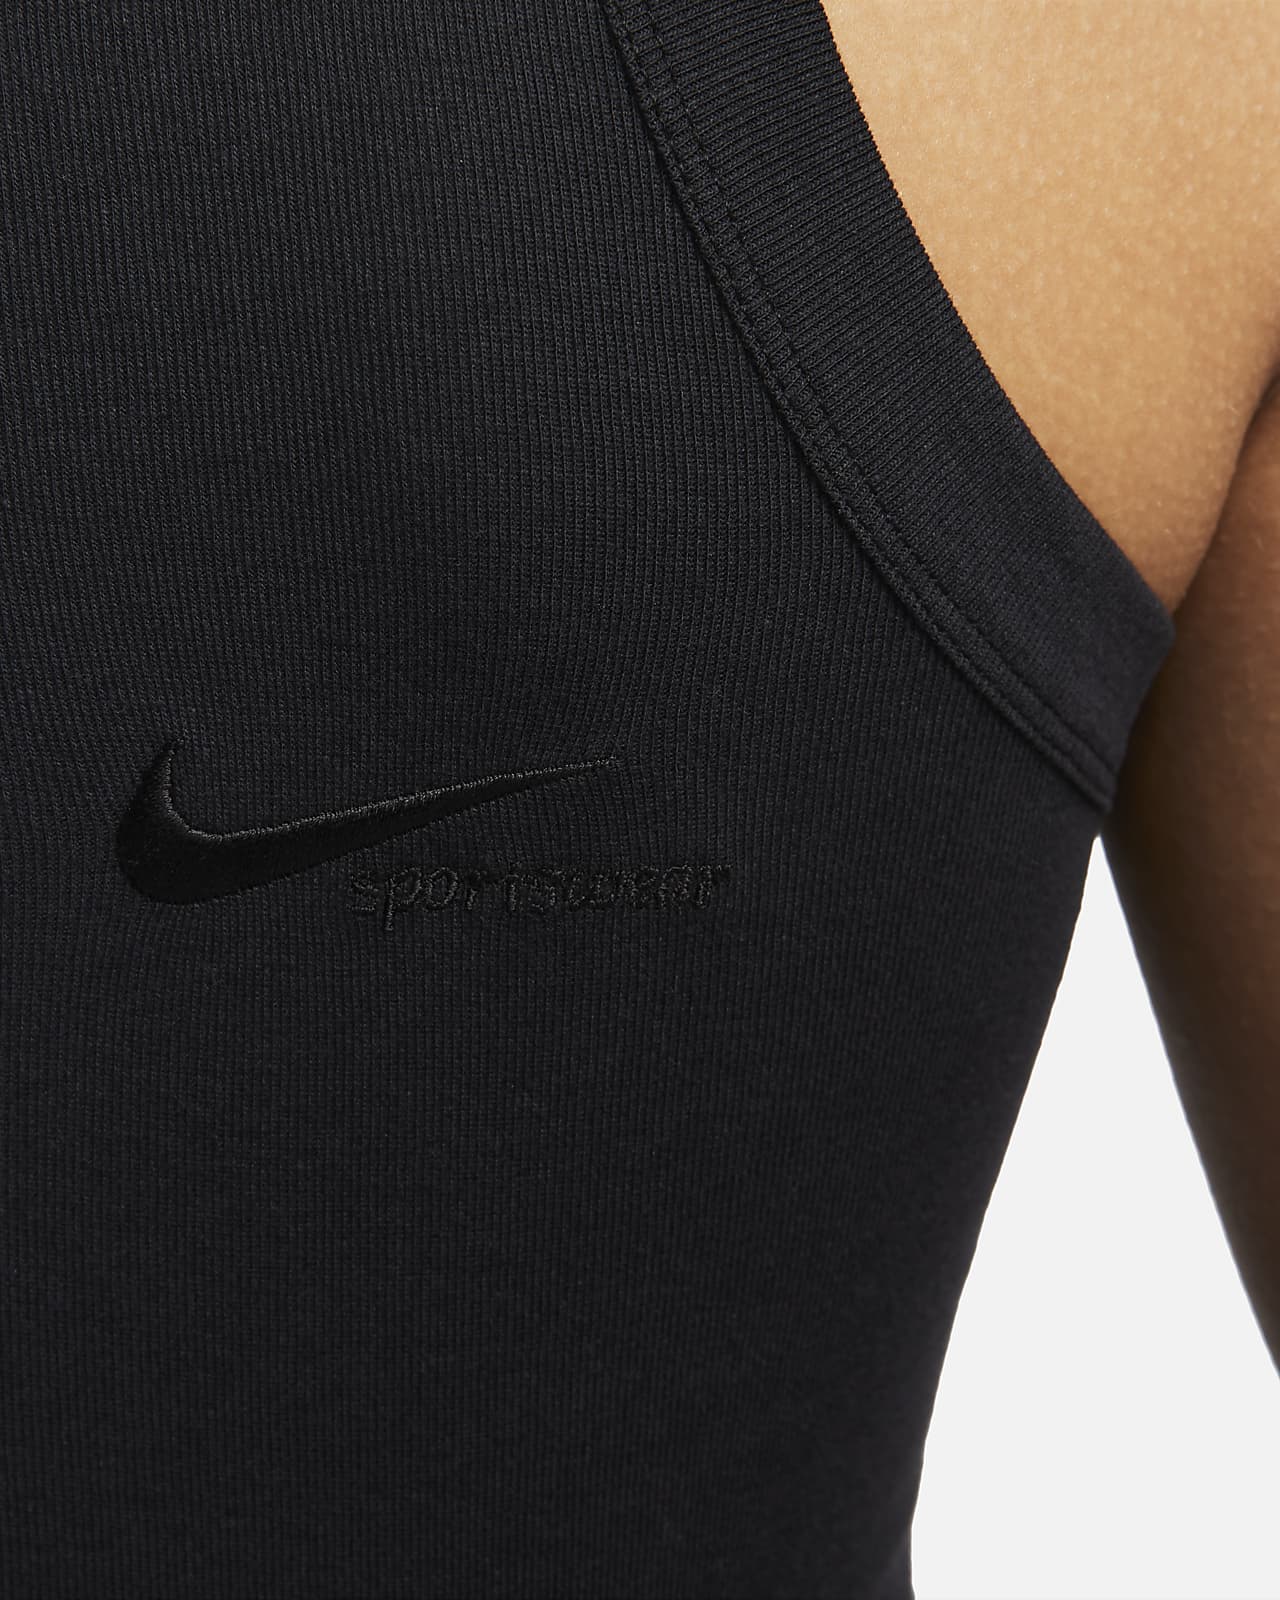 Nike Sportswear Collection Women's Cutout Tank Top.